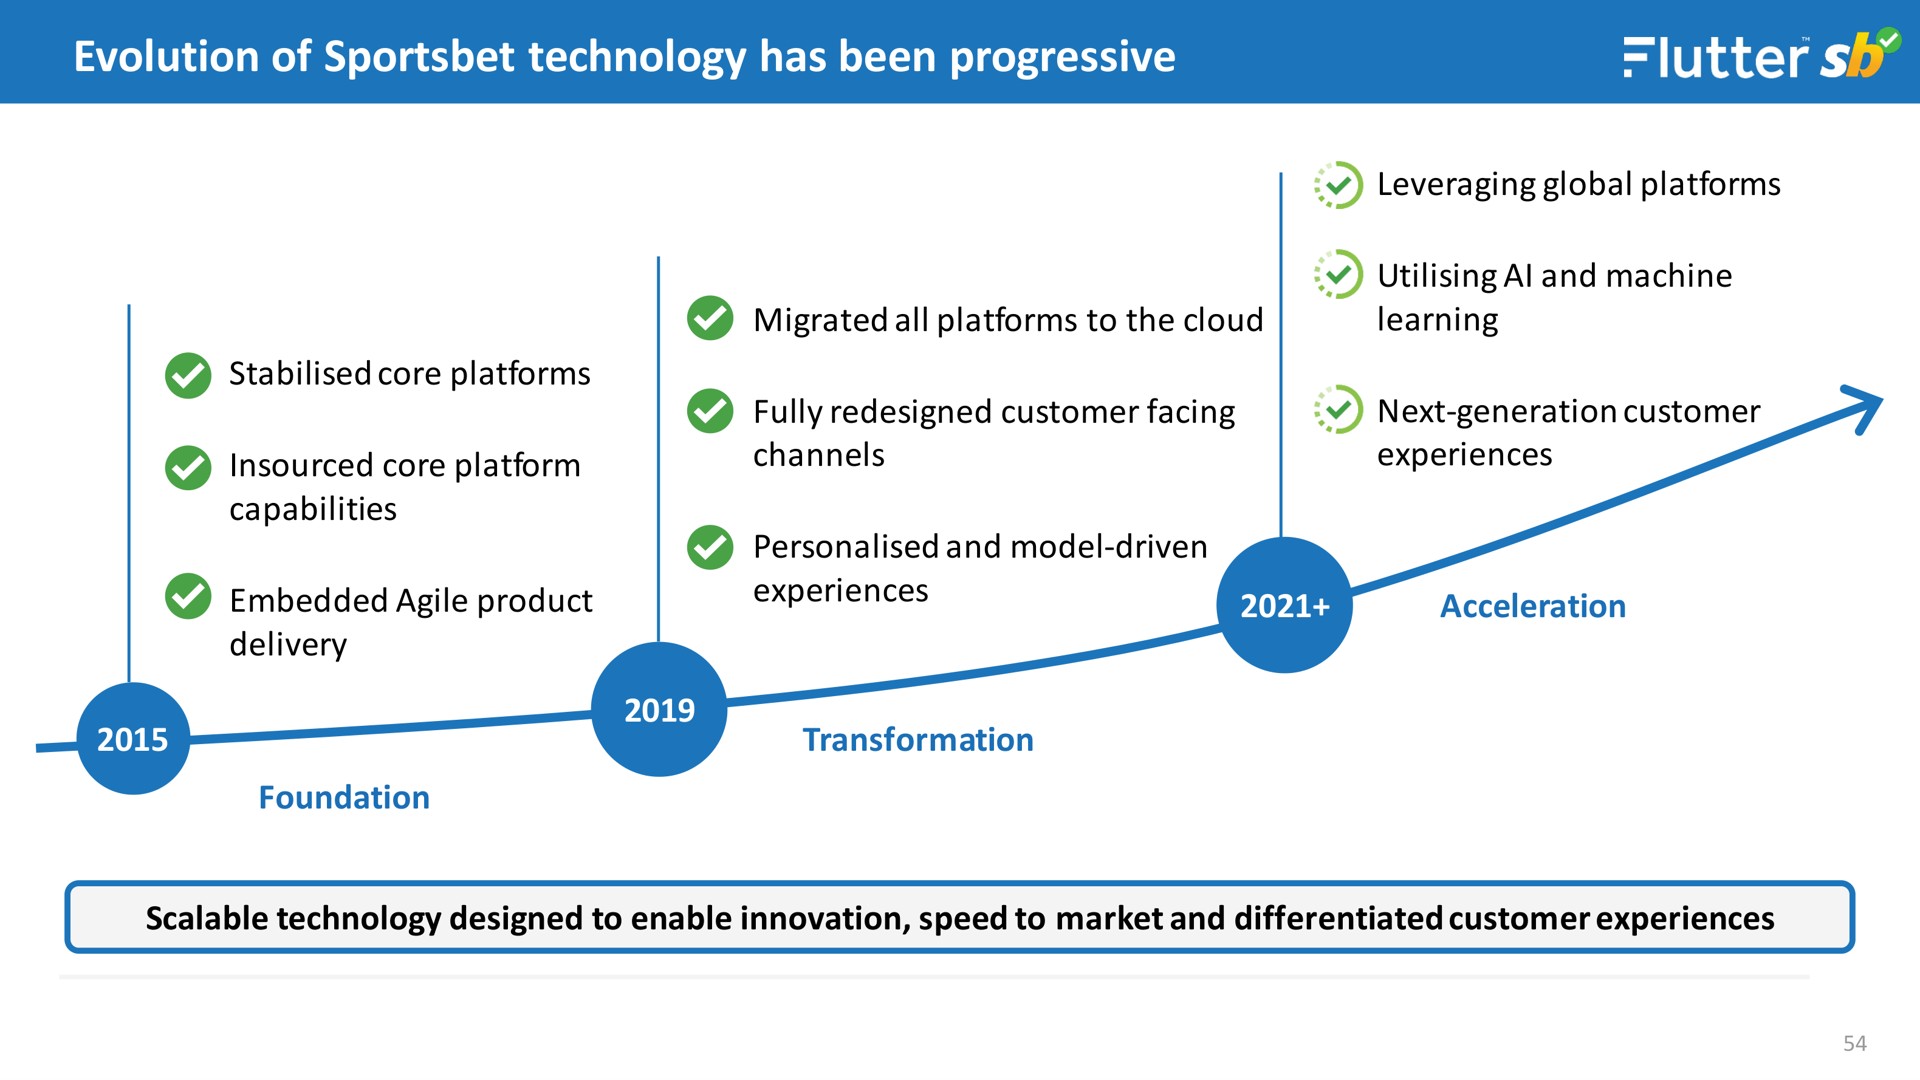 evolution of technology has been progressive | Flutter